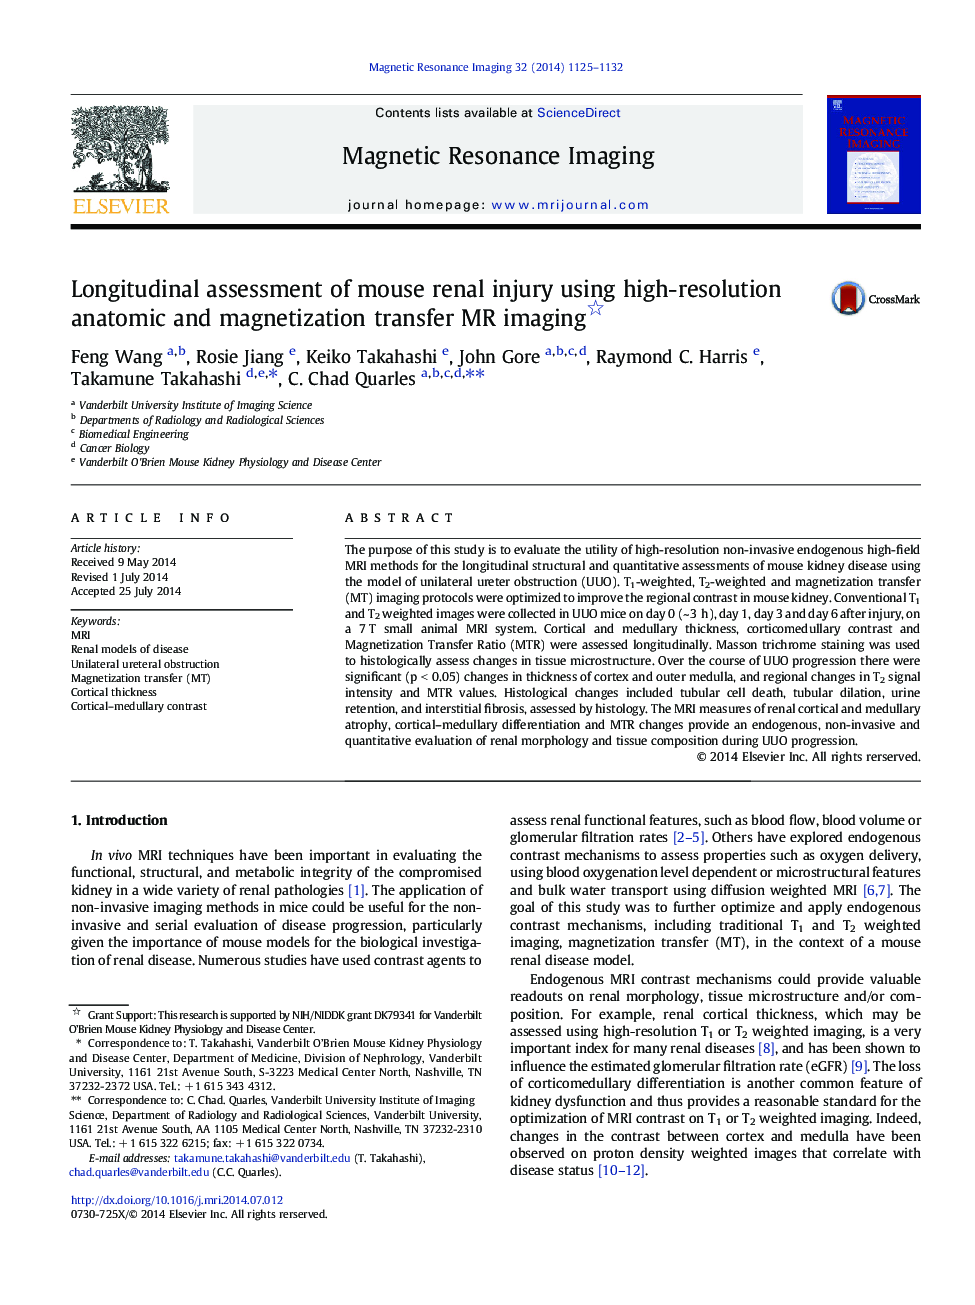 Longitudinal assessment of mouse renal injury using high-resolution anatomic and magnetization transfer MR imaging 